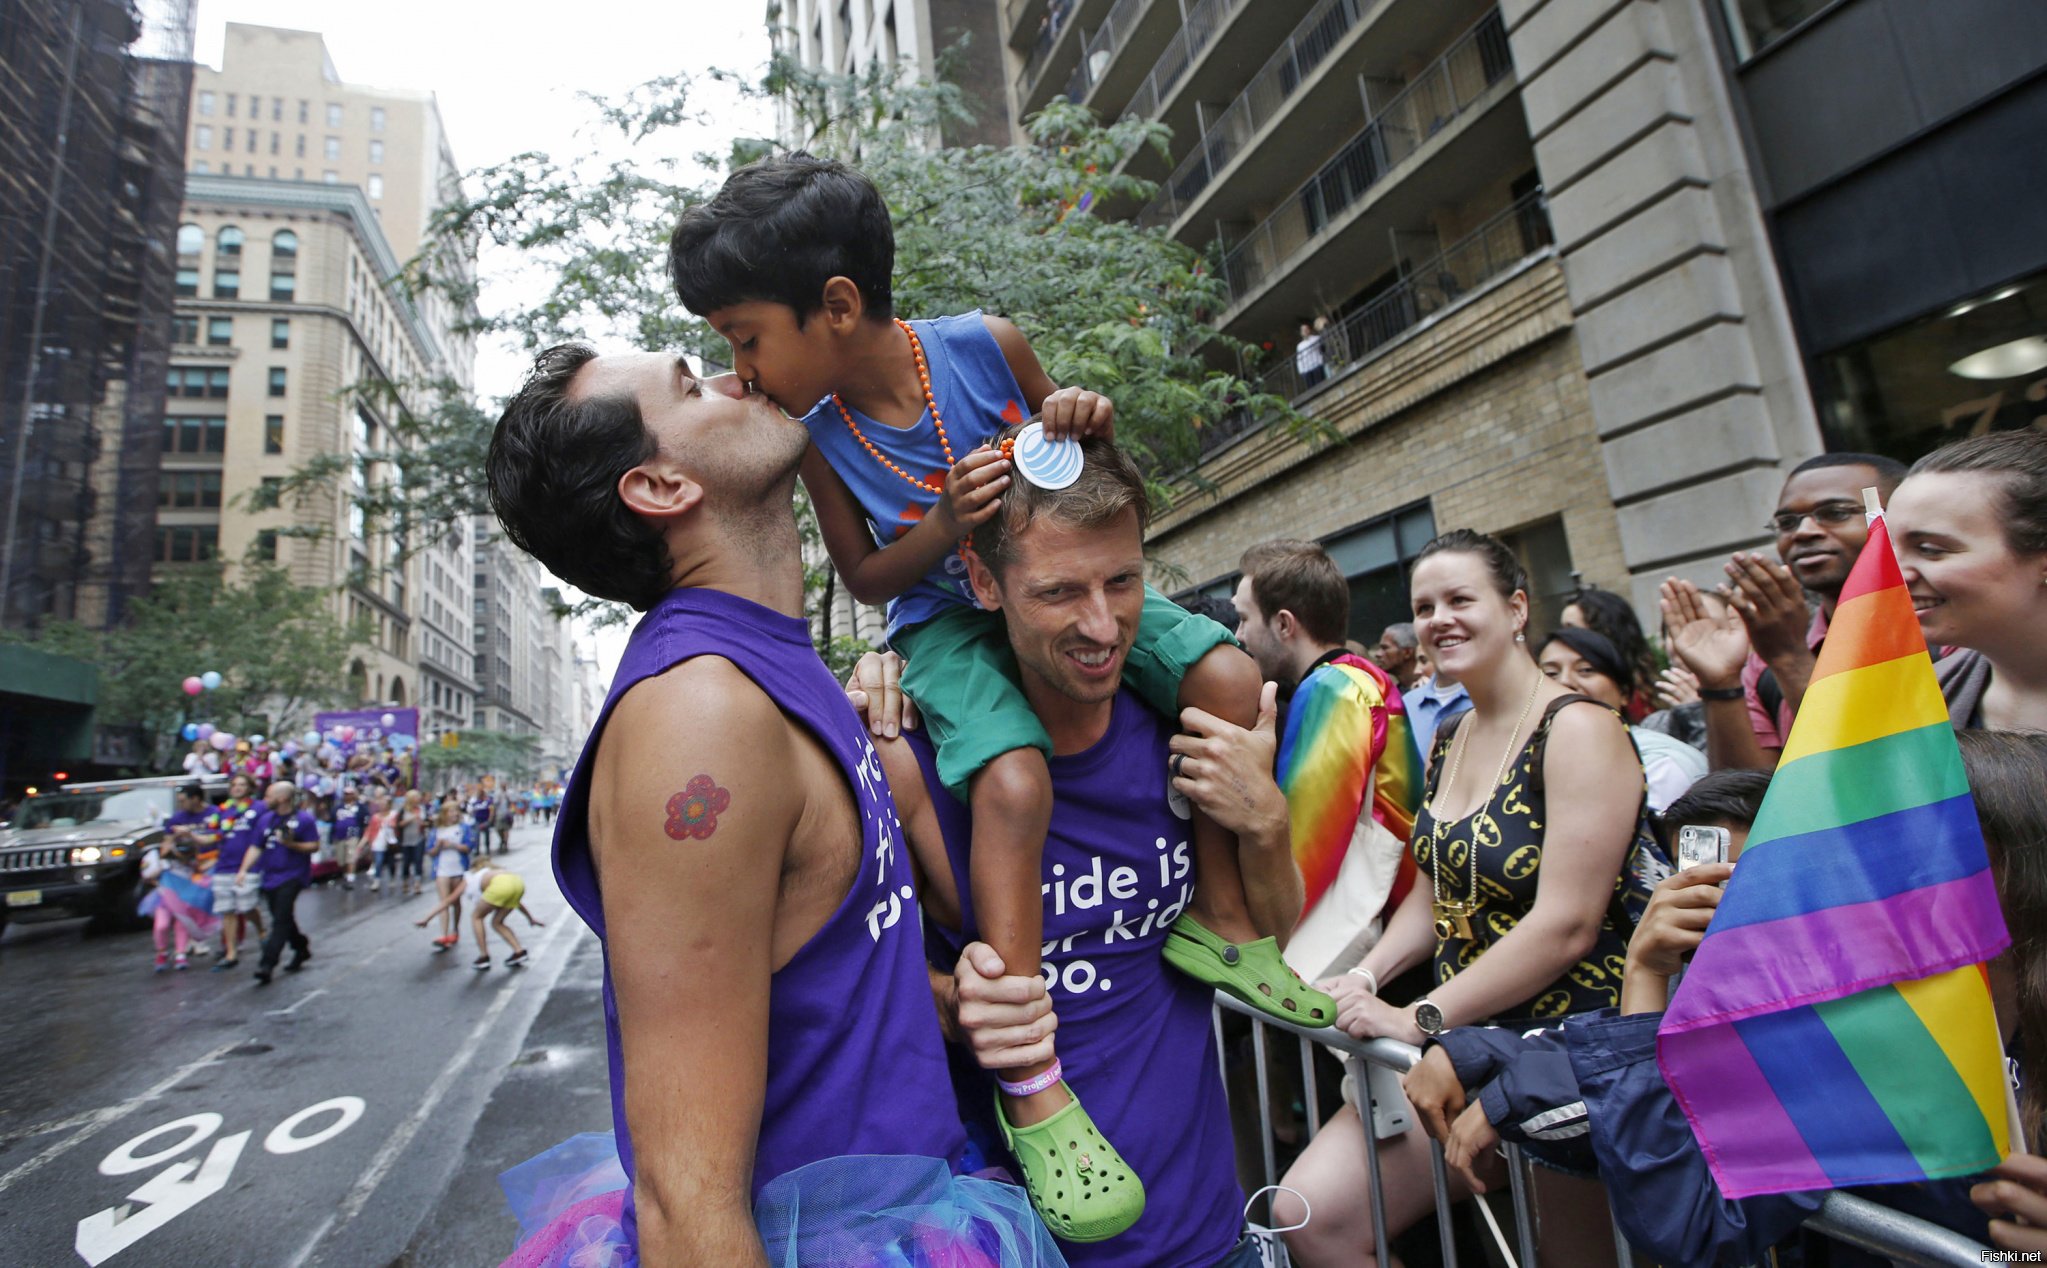 встреча геев на улице фото 51